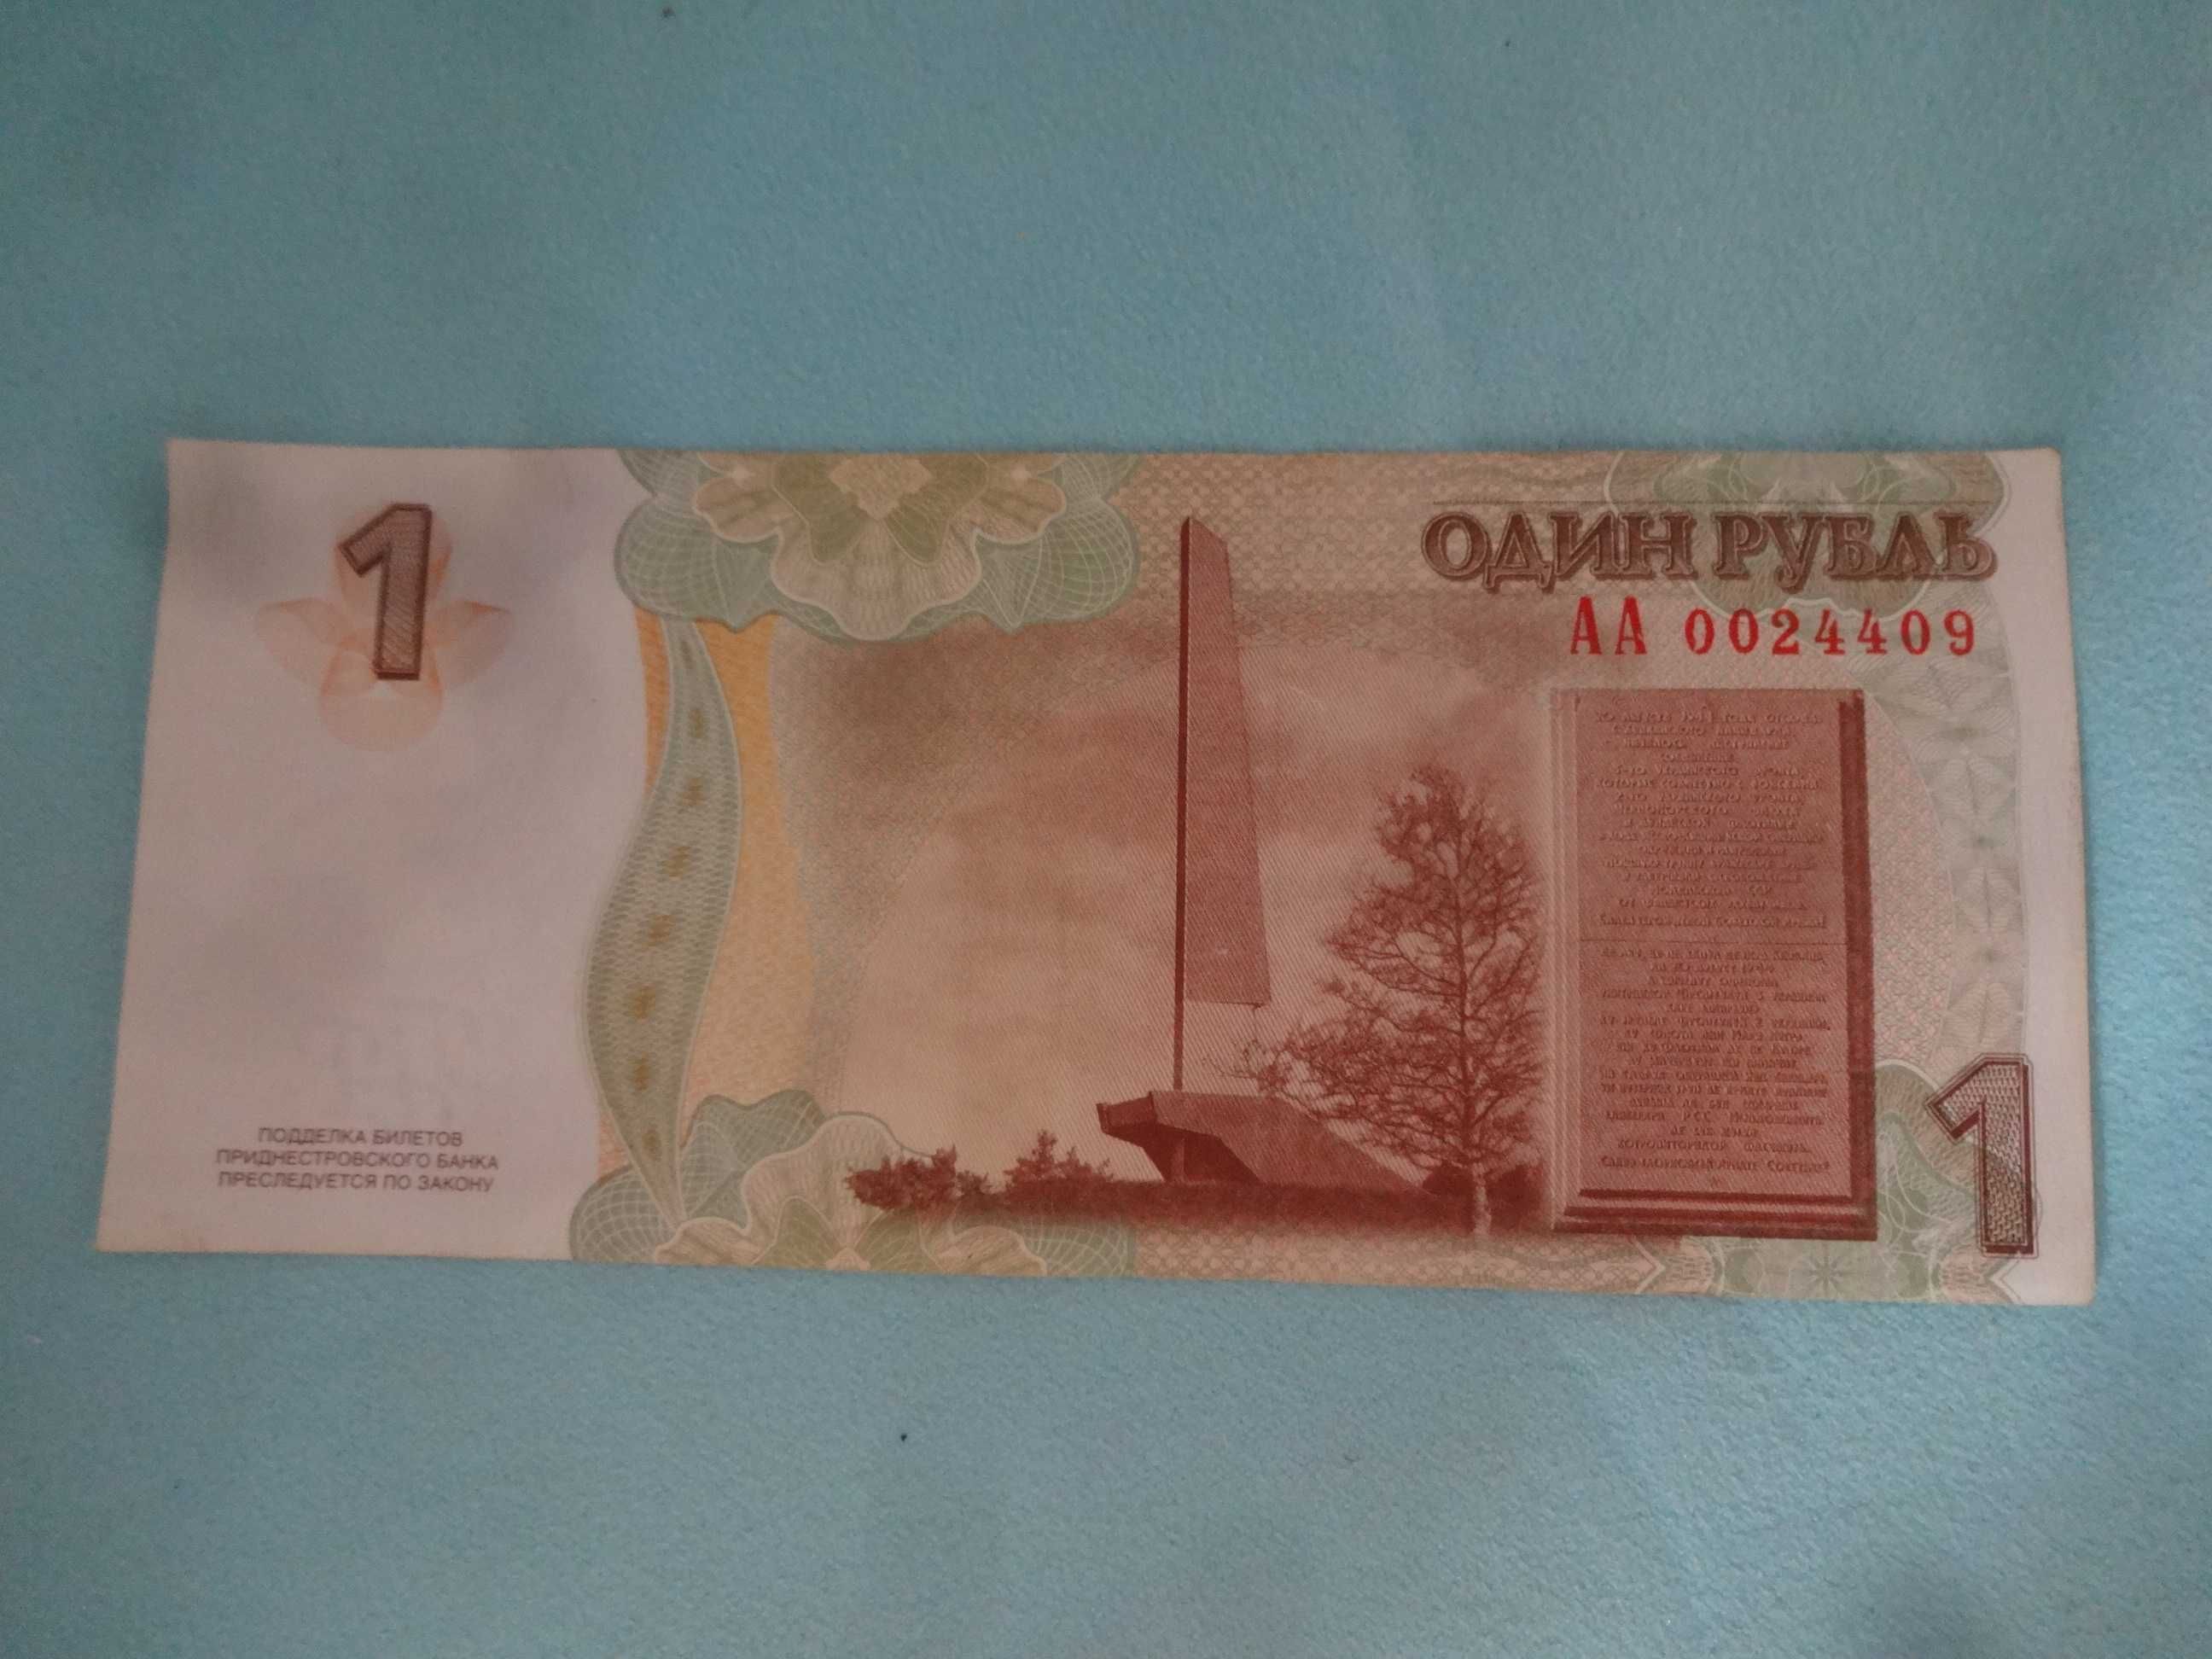 Banknot Transnistria (Moldova) 1 Ruble 2007 nie Rosja